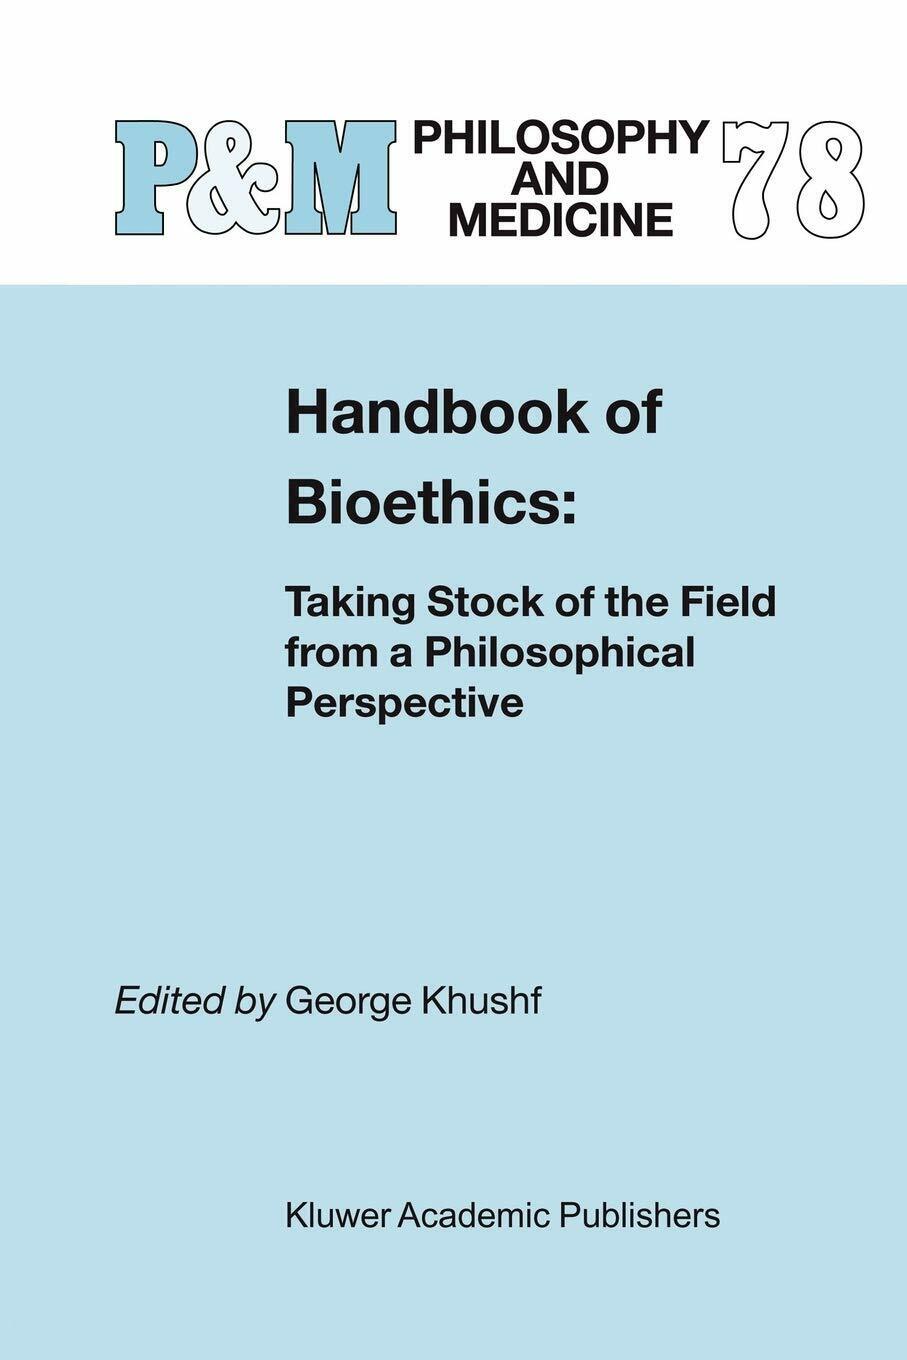 Handbook Of Bioethics - George Khushf - Springer, 2007